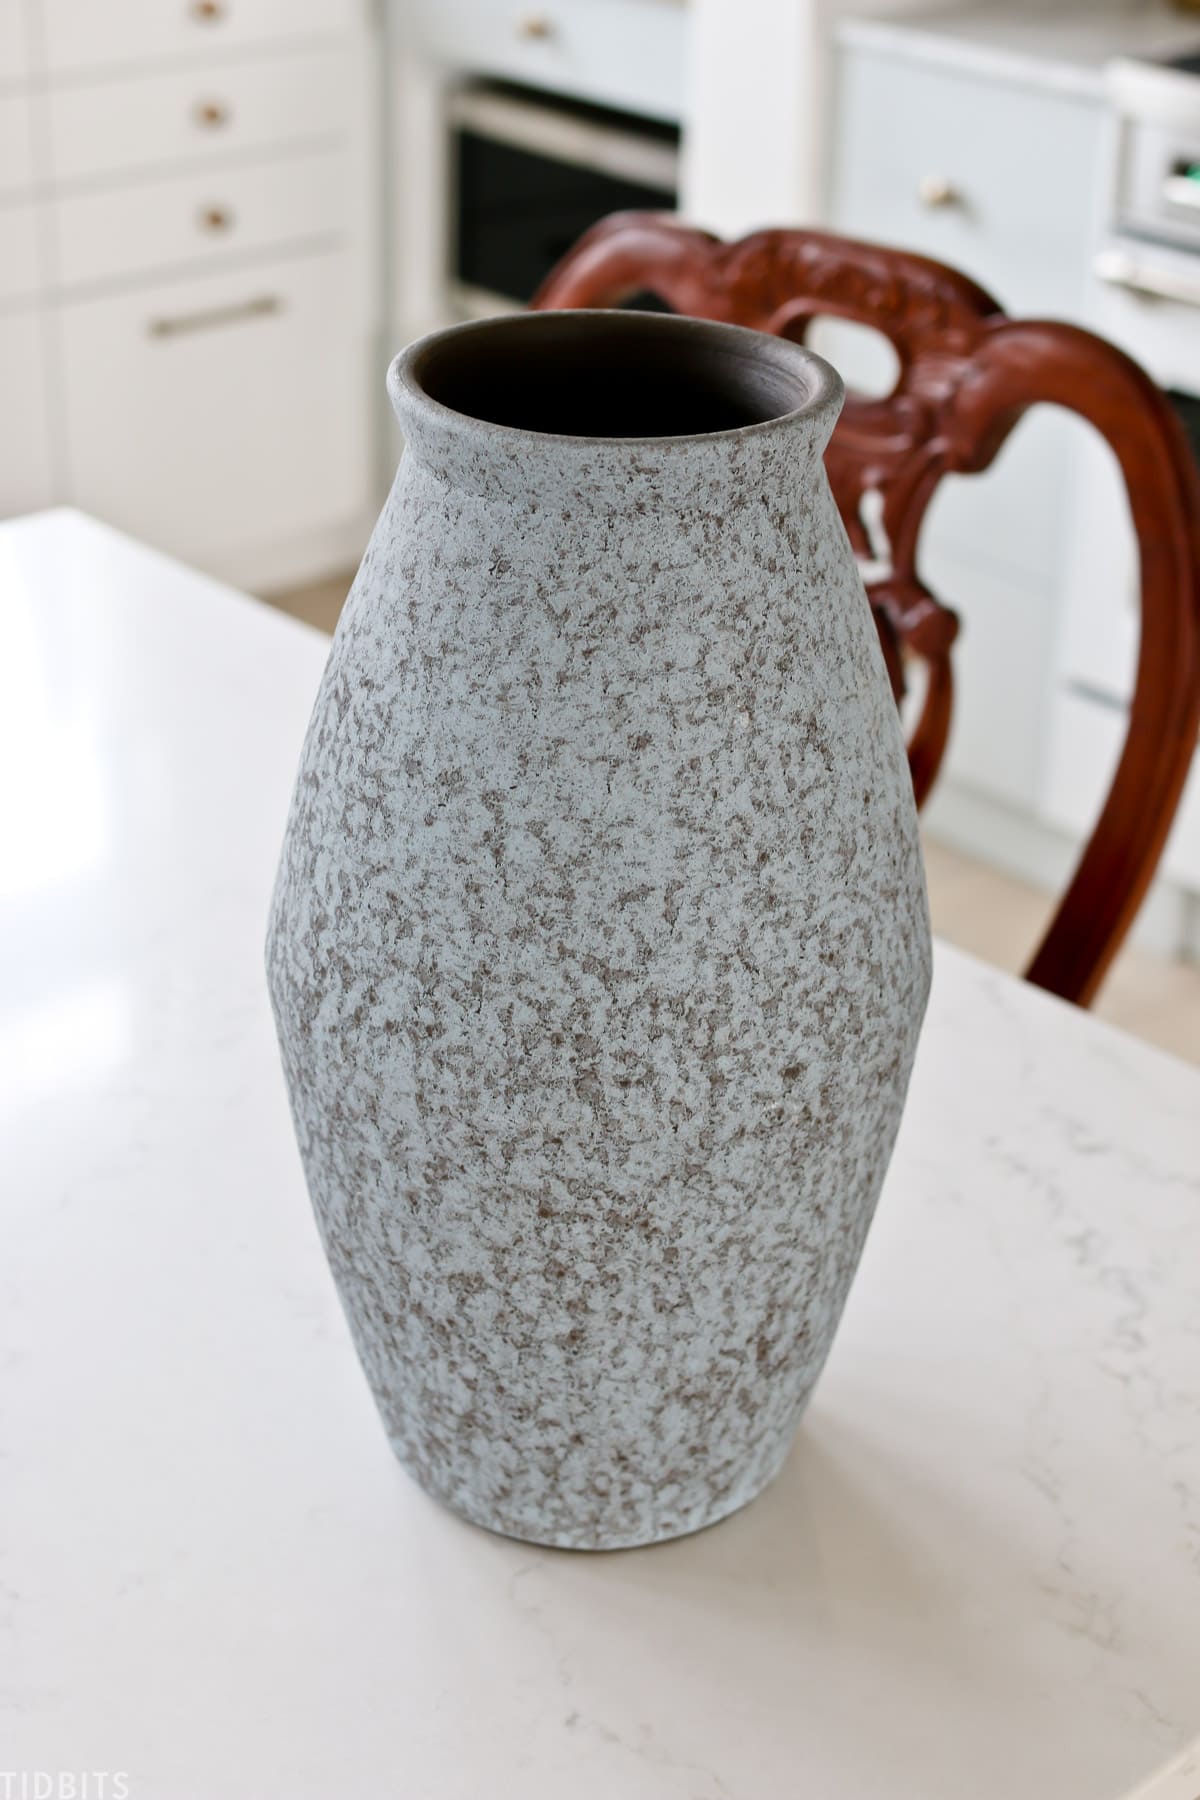 DIY Plaster Vase Makeover | Brand New to Old World Style